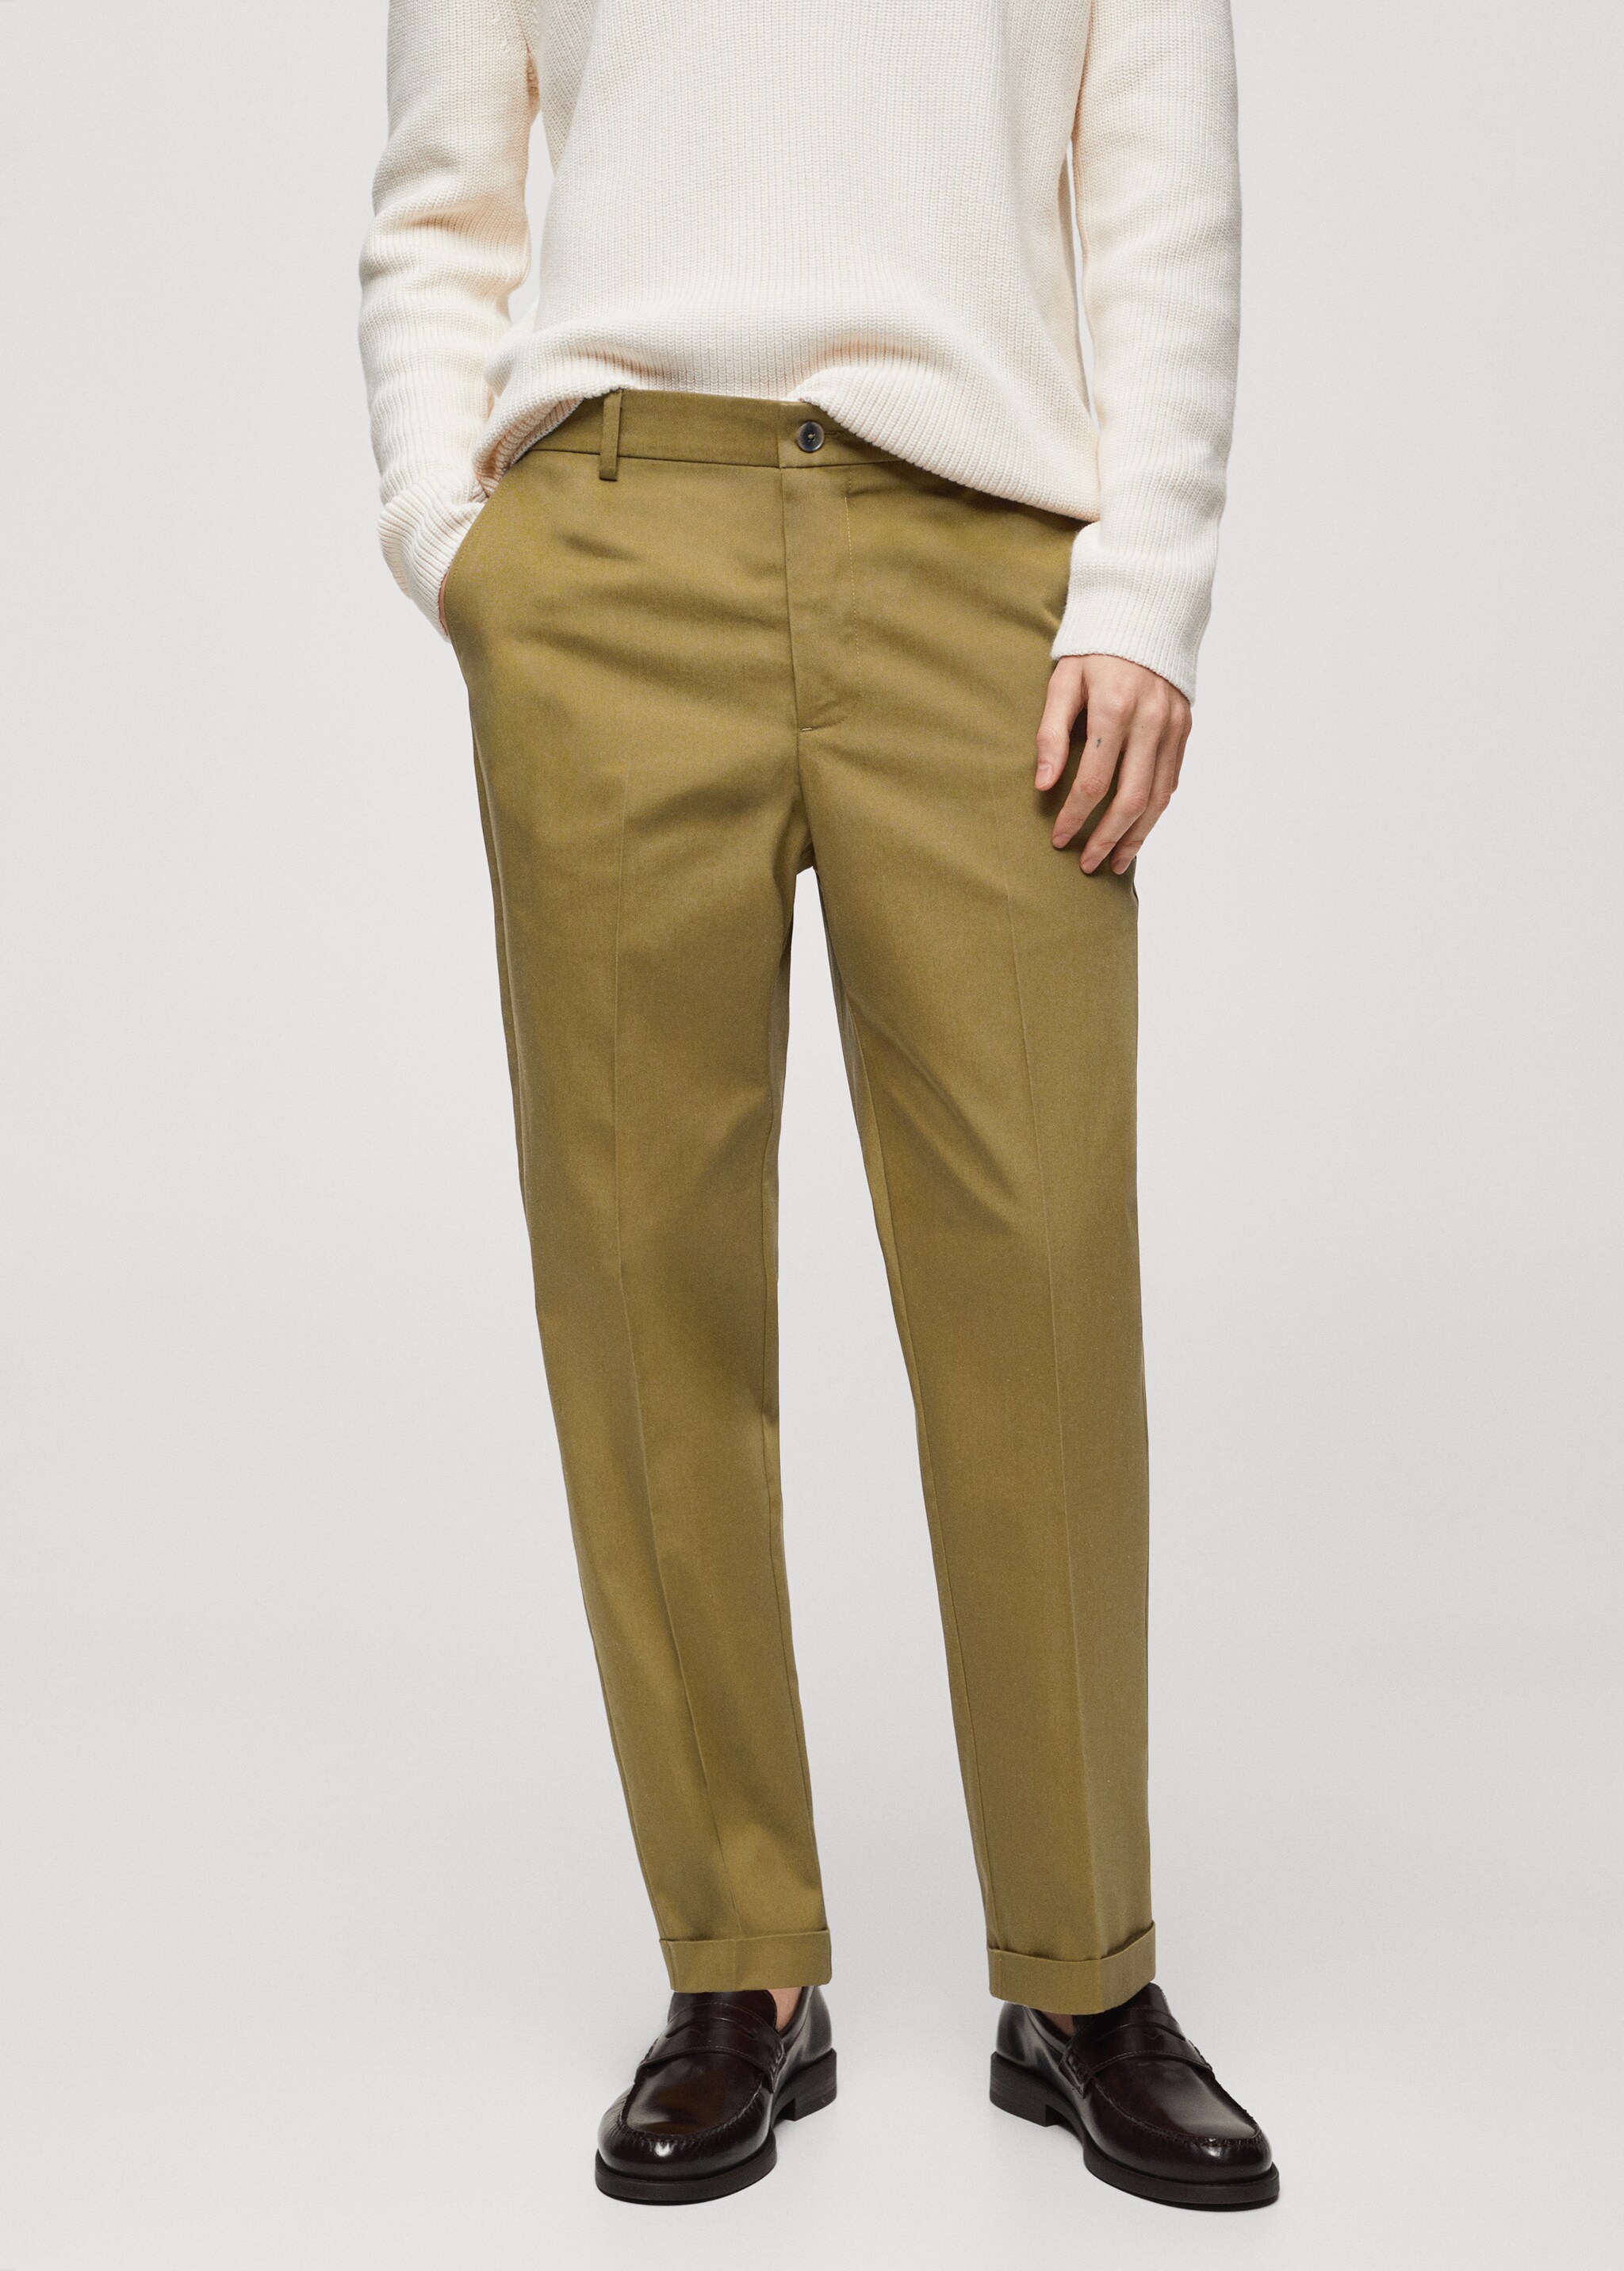 Straight fit cotton pants back - Medium plane